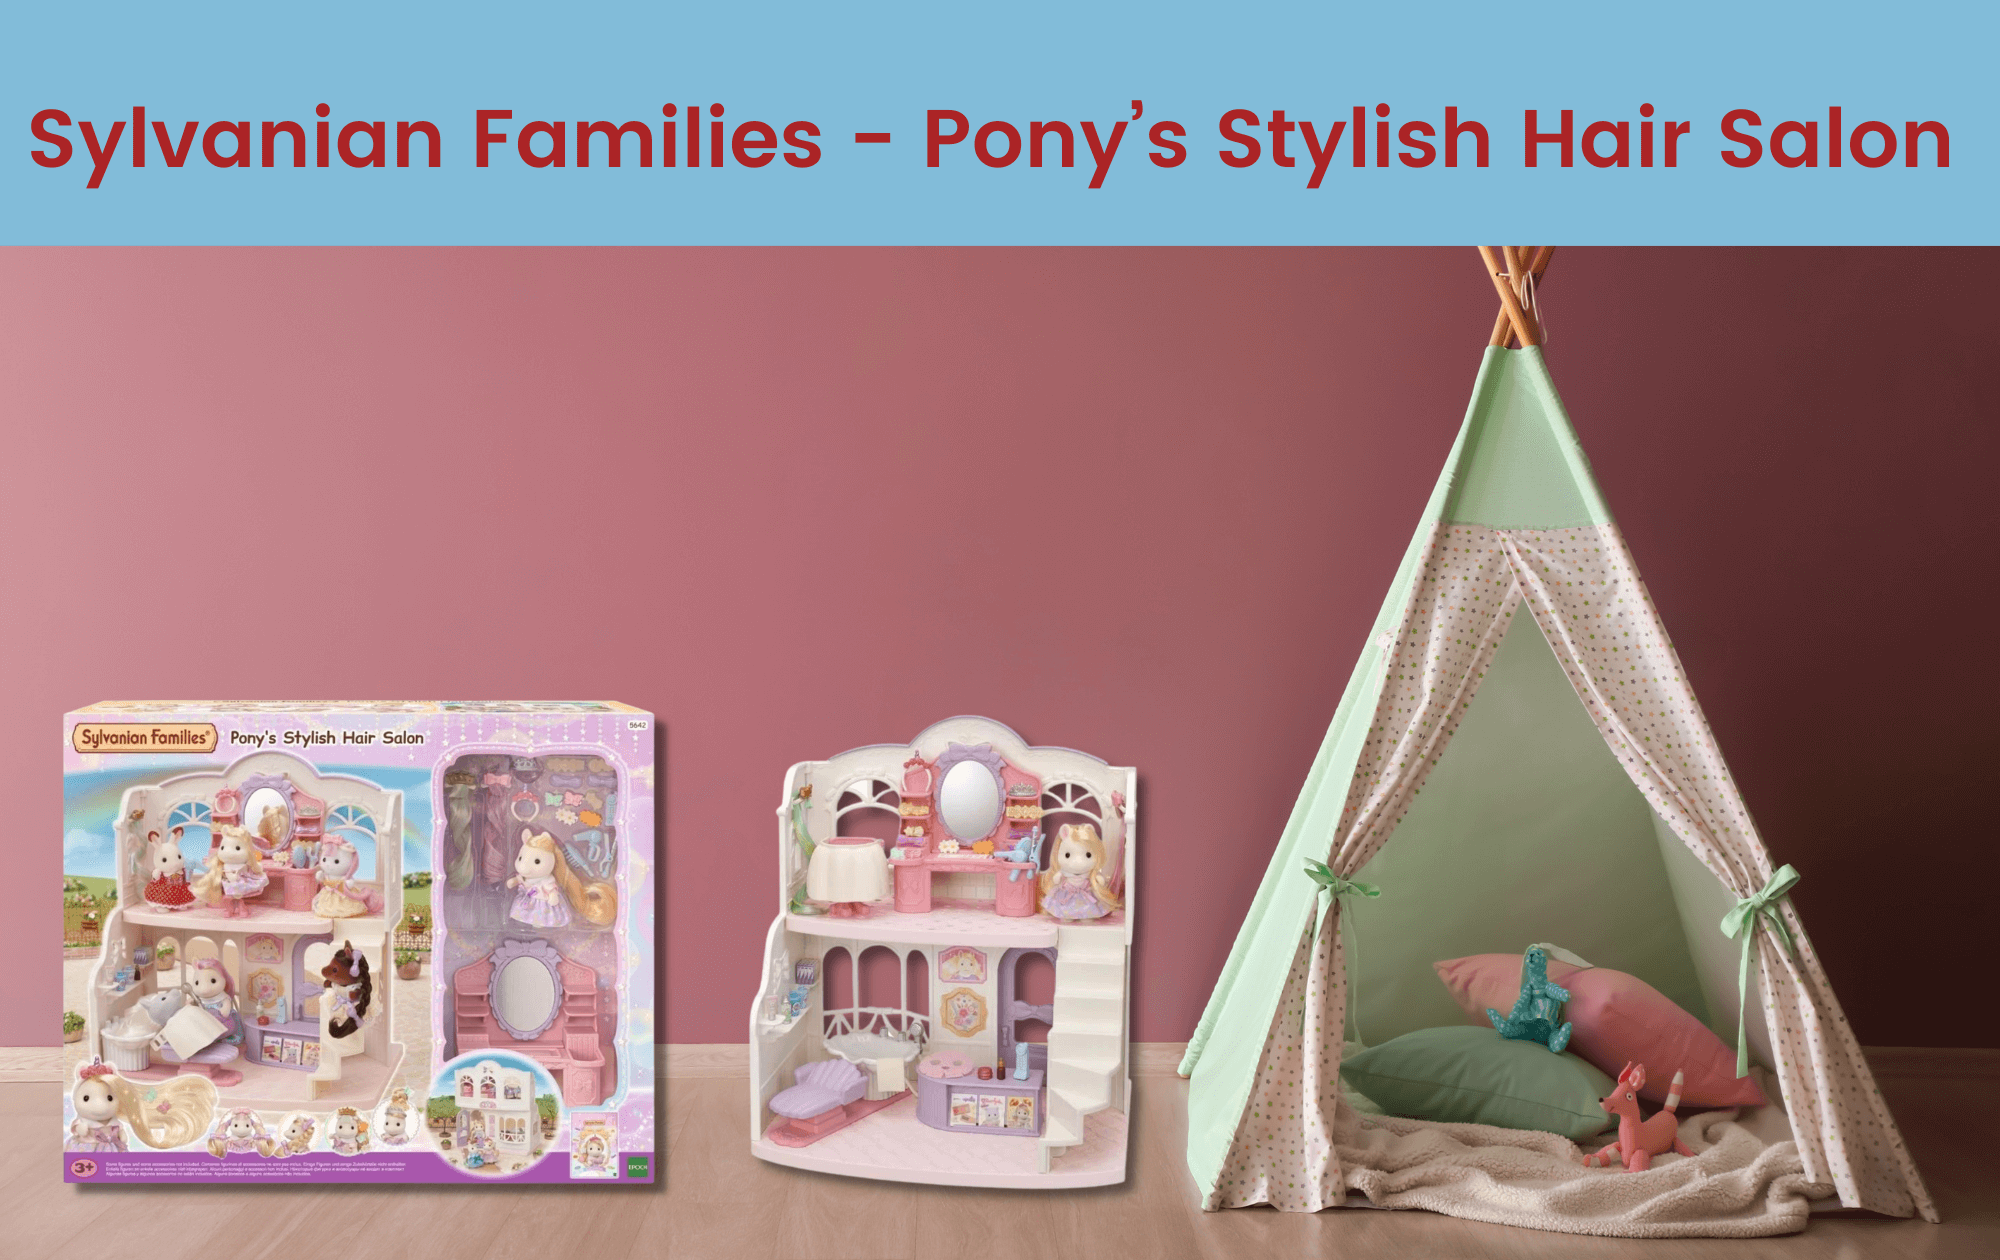 Sylvanian Families - Pony’s Stylish Hair Salon